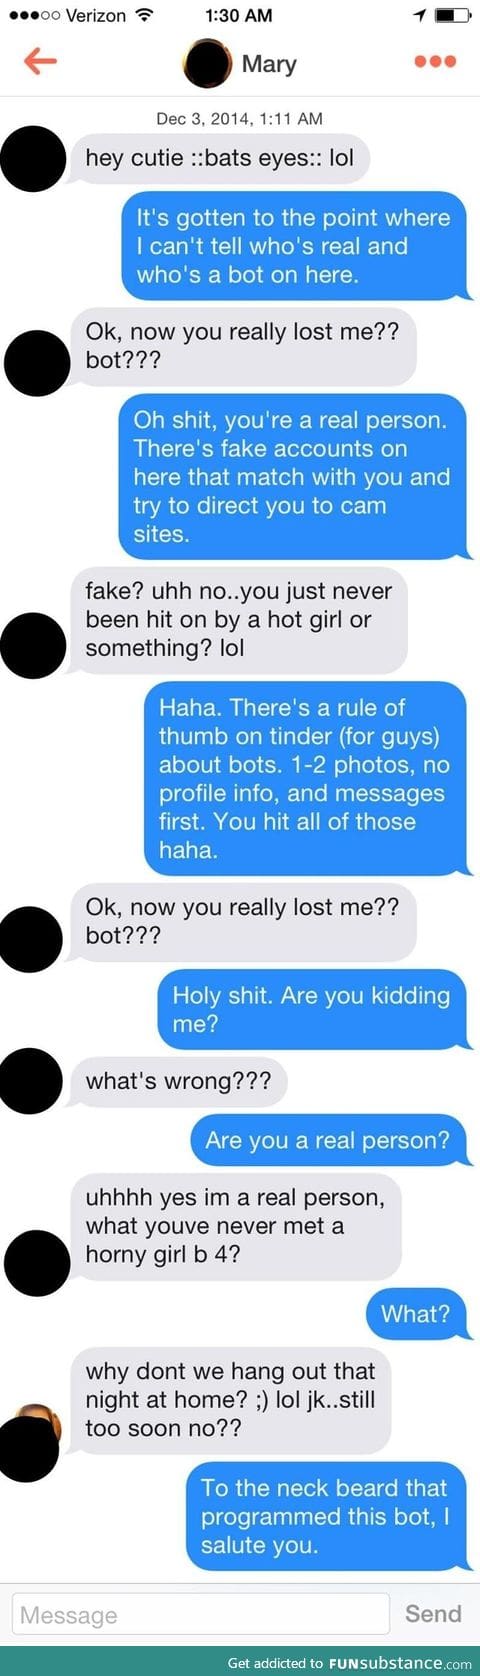 Bot or not?